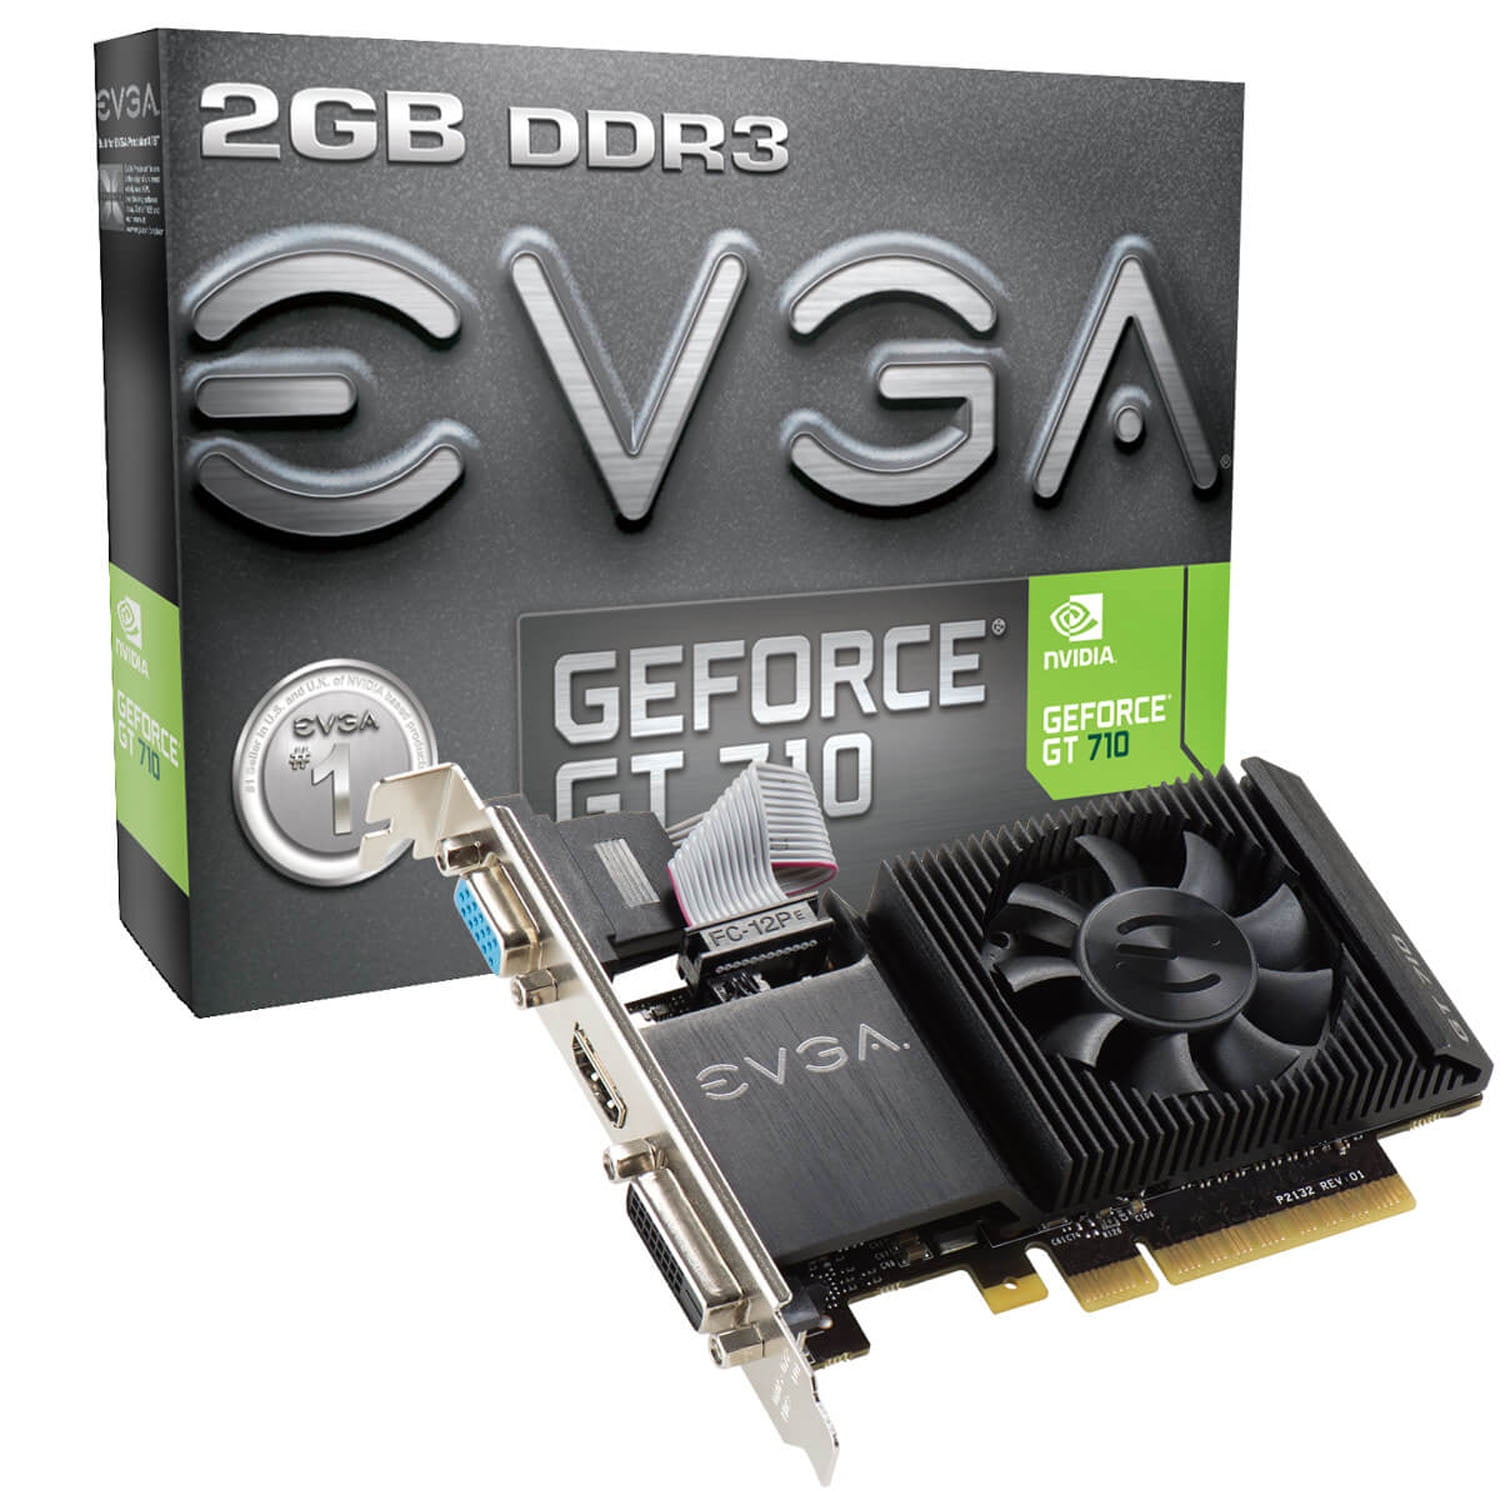 NeweggBusiness - EVGA GeForce GT 740 2GB GDDR5 PCI Express 3.0 Low Profile  Video Card 02G-P4-3740-KR